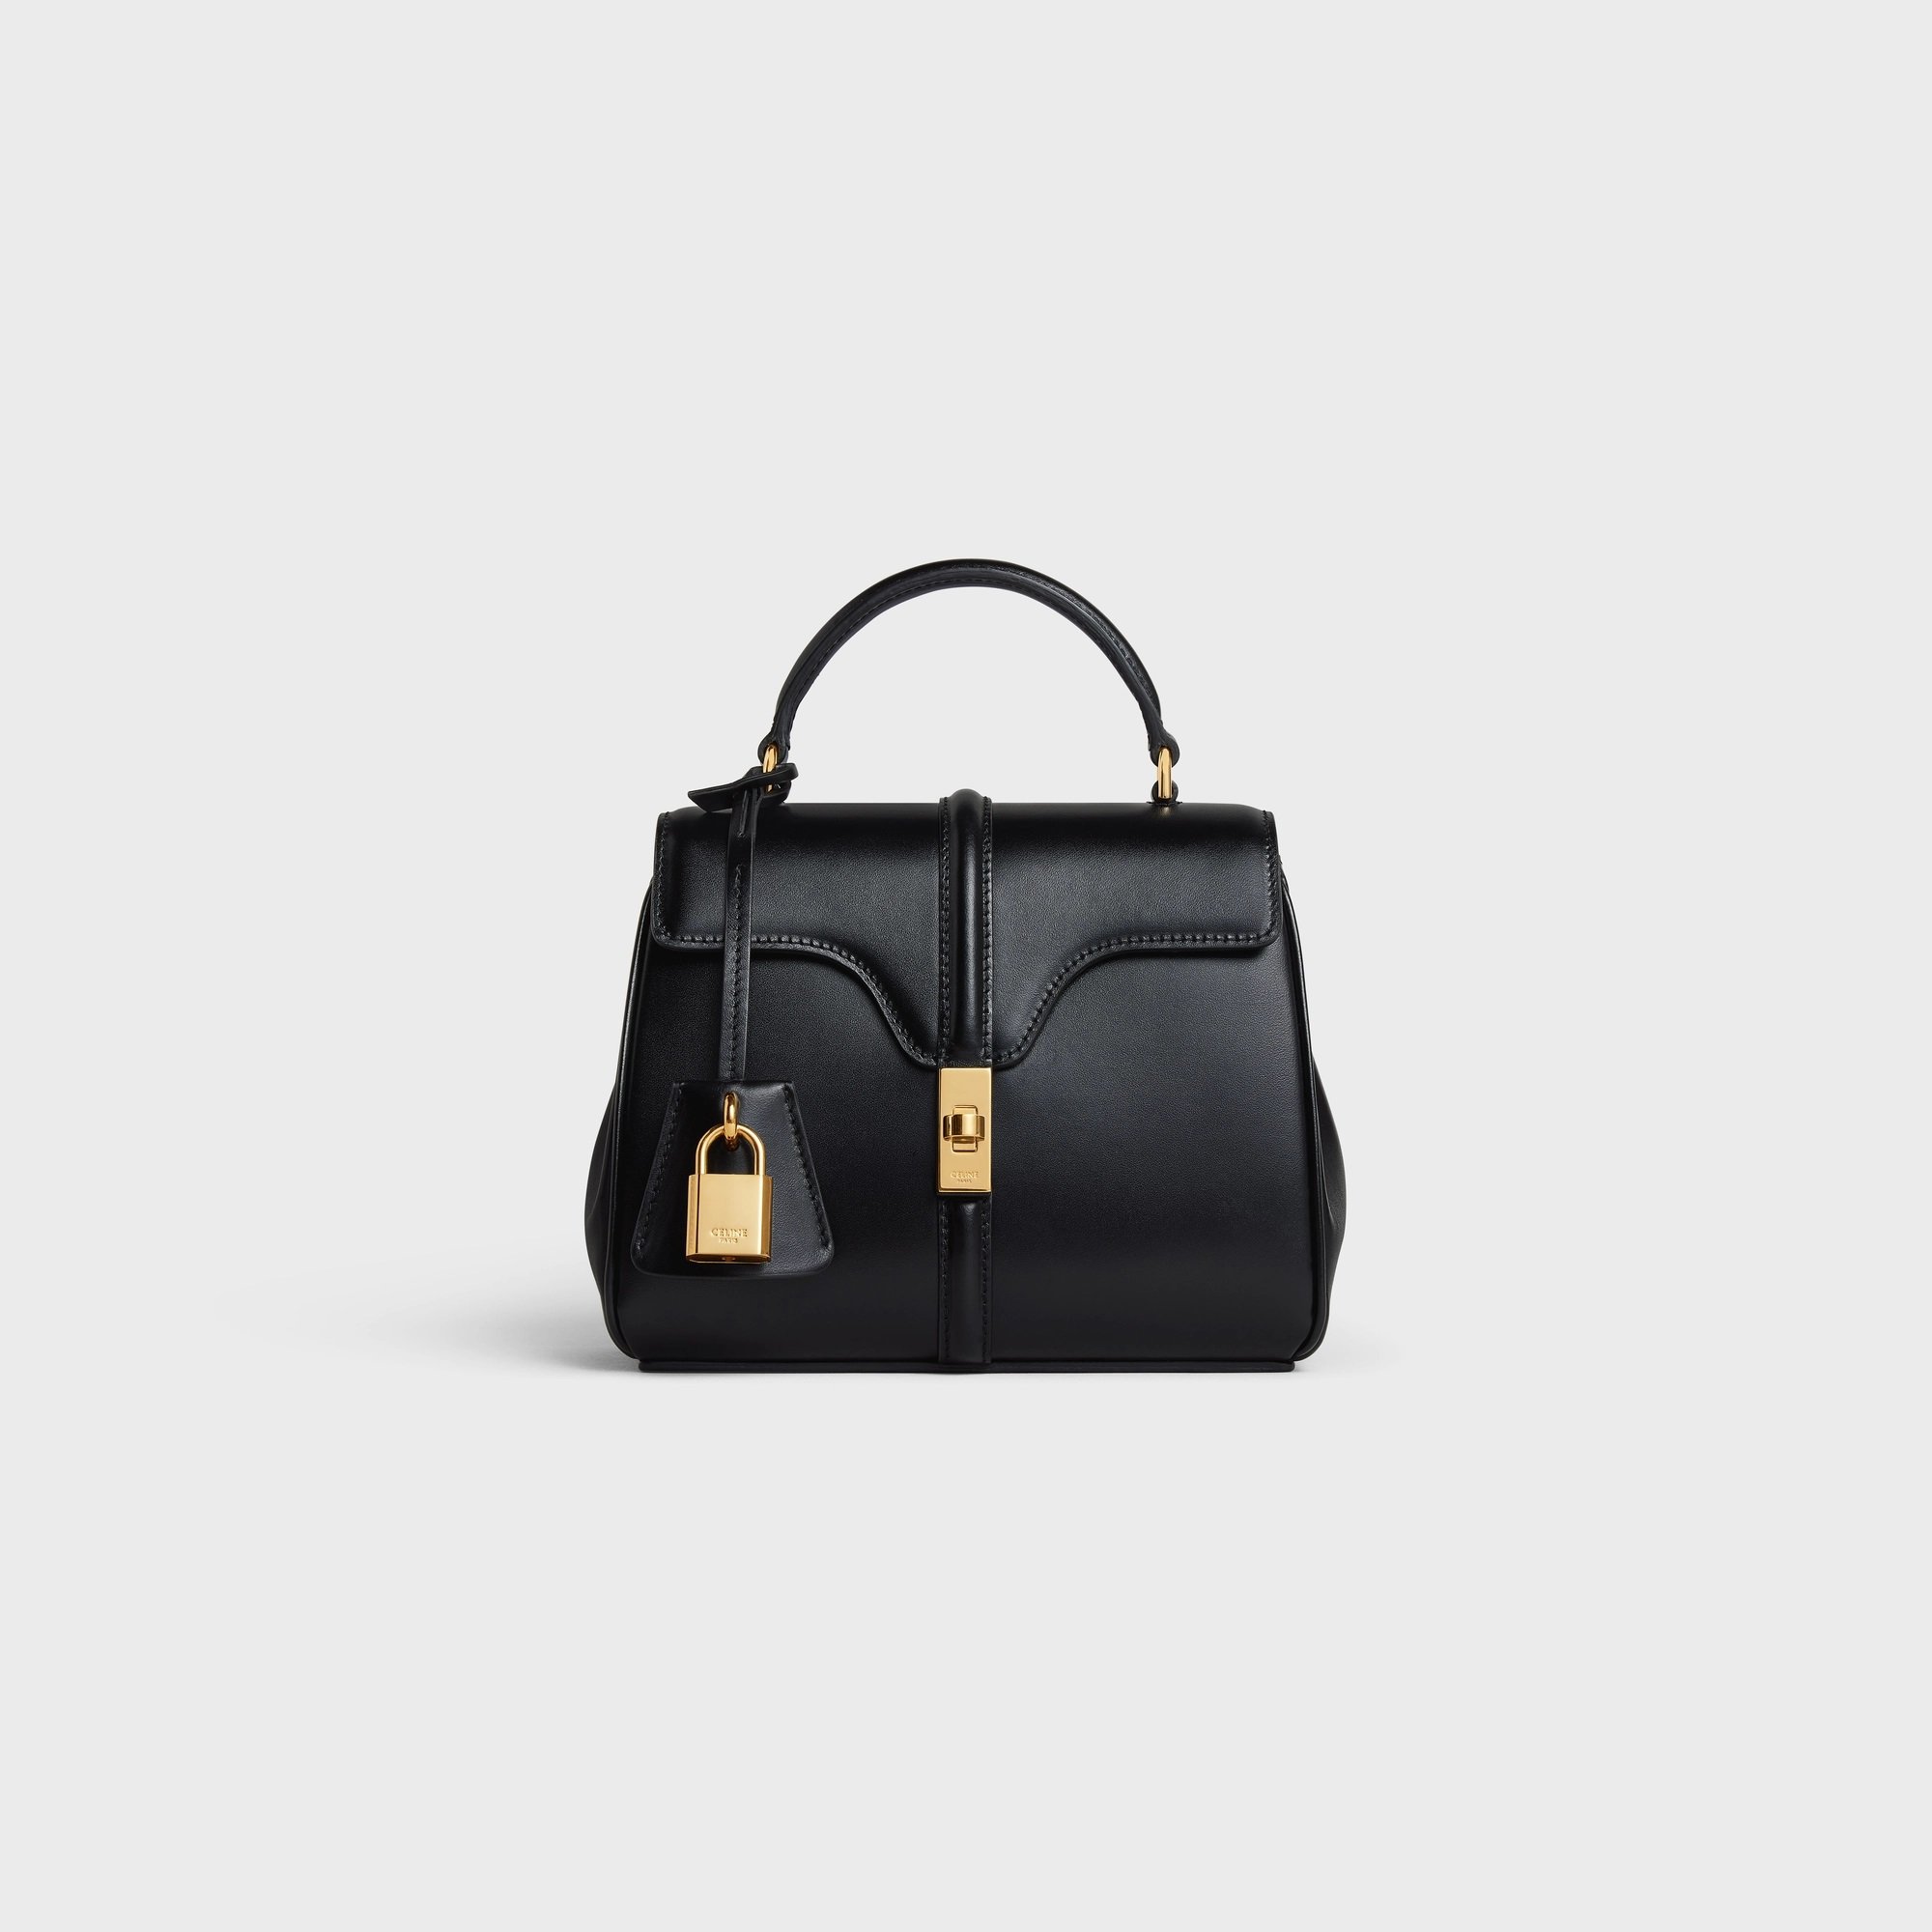 Céline Mini 16 Bag in Black Satinated Calfskin.jpg